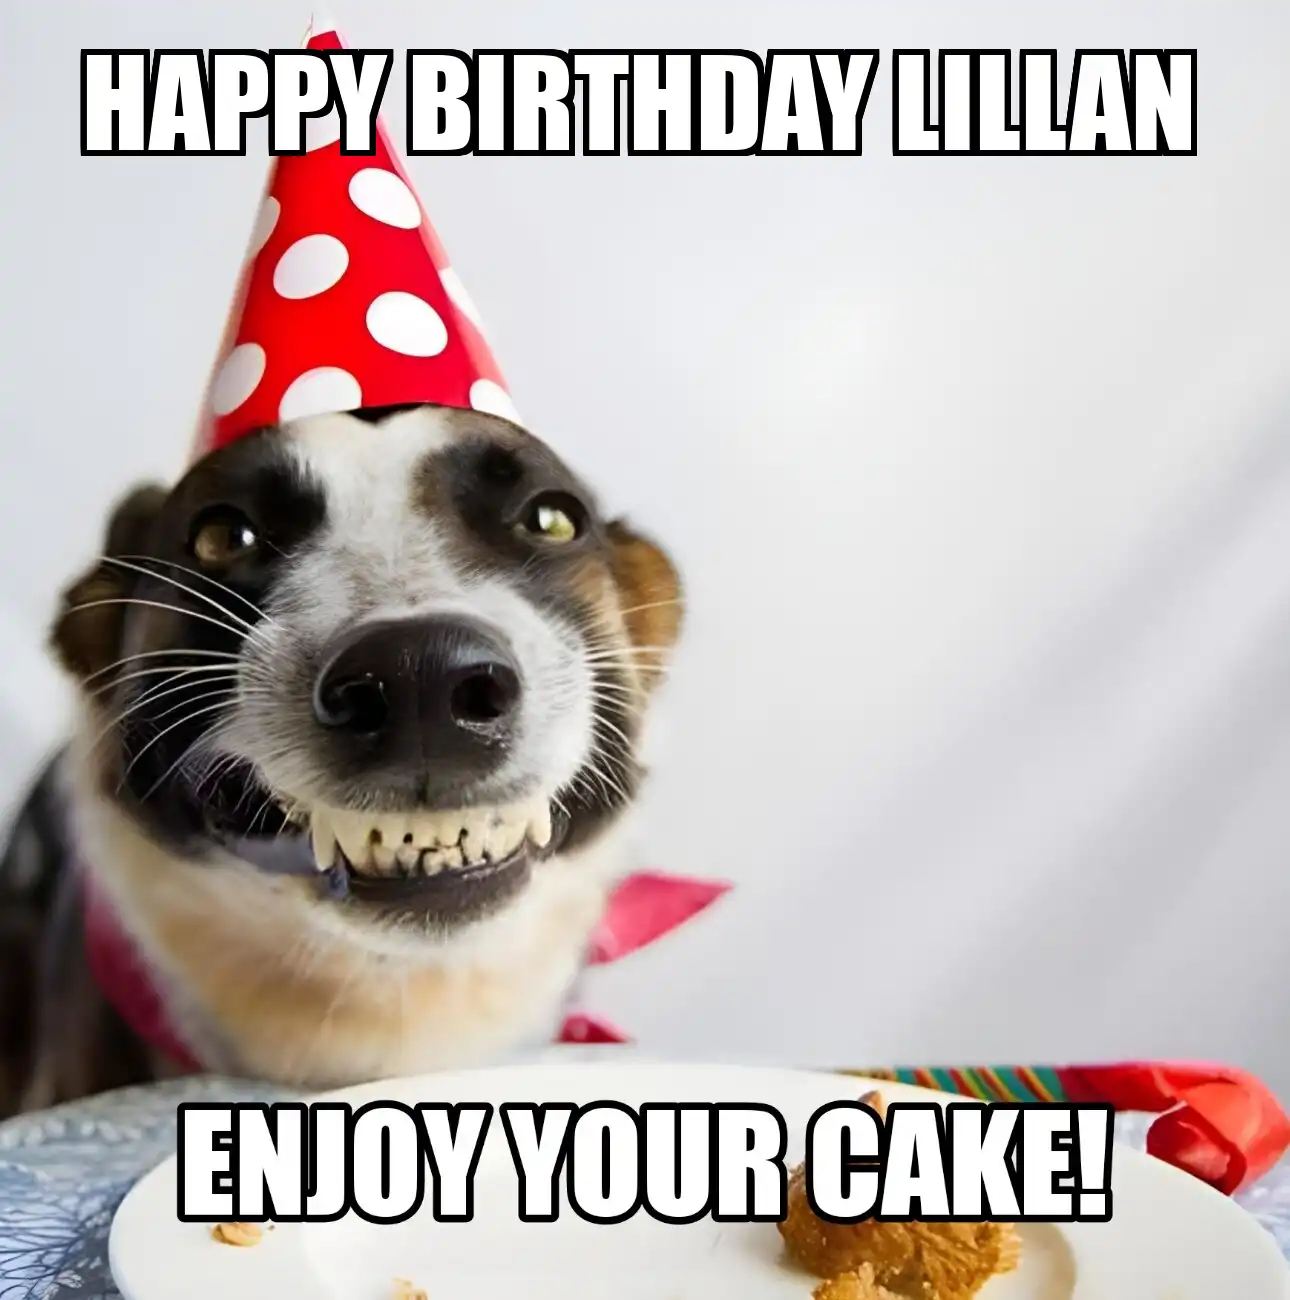 Happy Birthday Lillan Enjoy Your Cake Dog Meme